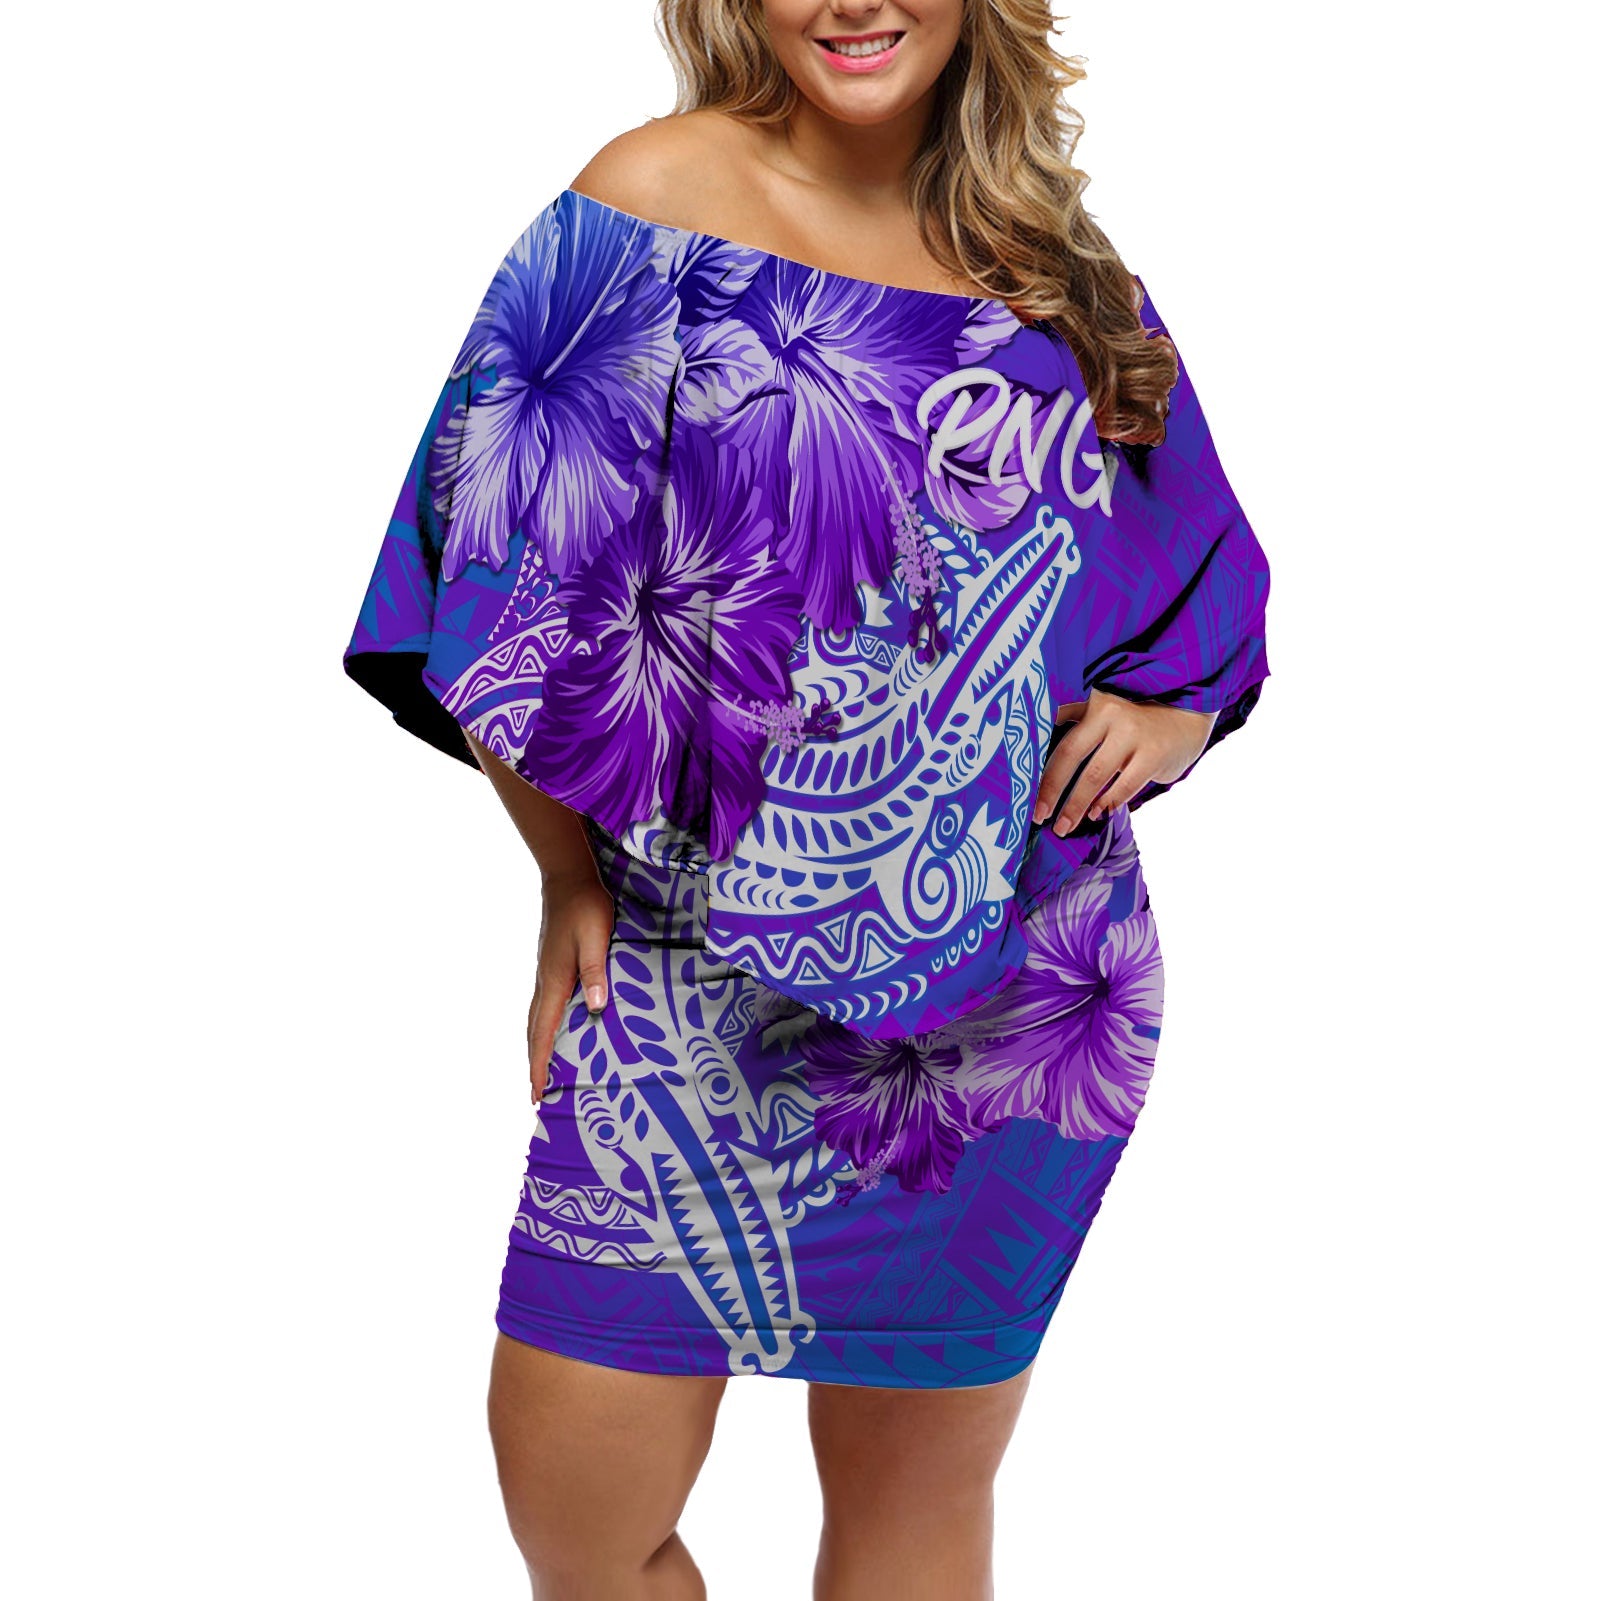 PNG Off Shoulder Short Dress Papua Sepik Crocodile Tattoo - Purple Ombre LT7 Women Purple - Polynesian Pride